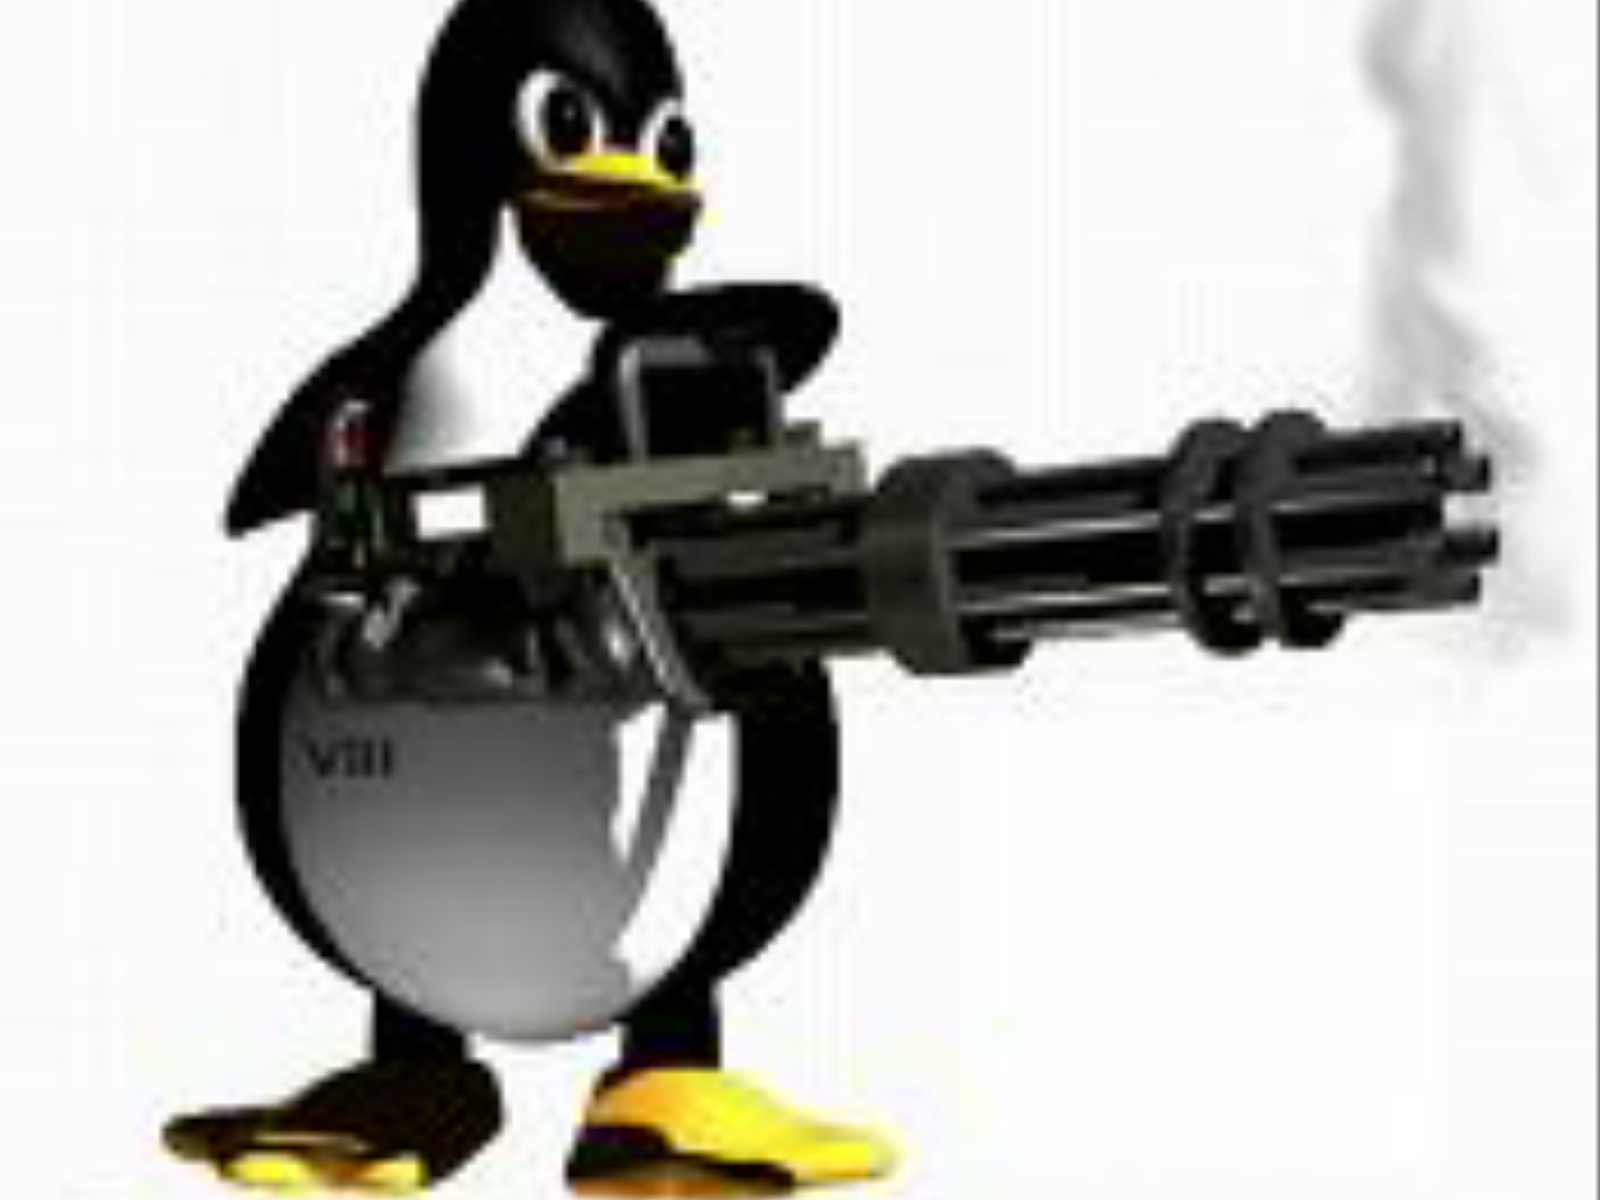 penguin_with_a_gatling_gun_by_kain20.jpg